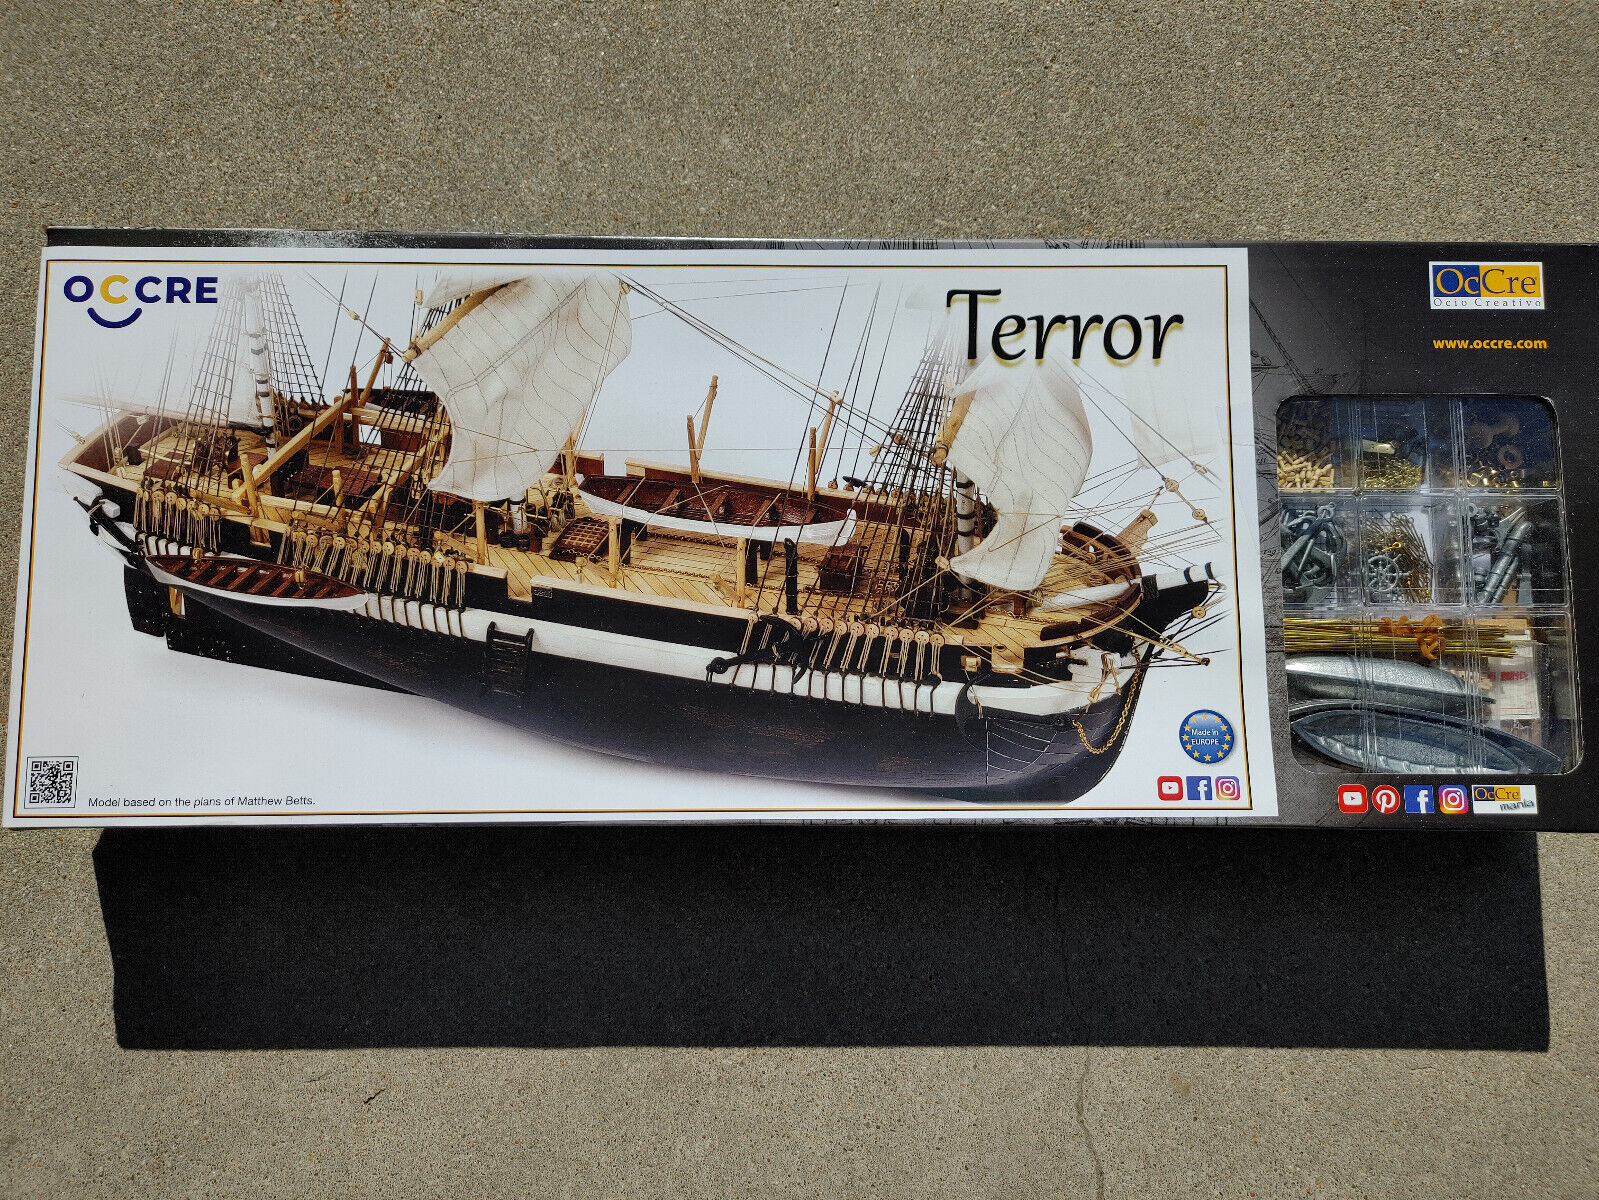 New/Open Box- HMS Terror Wooden Ship Model - 1:75 scale by OcCre